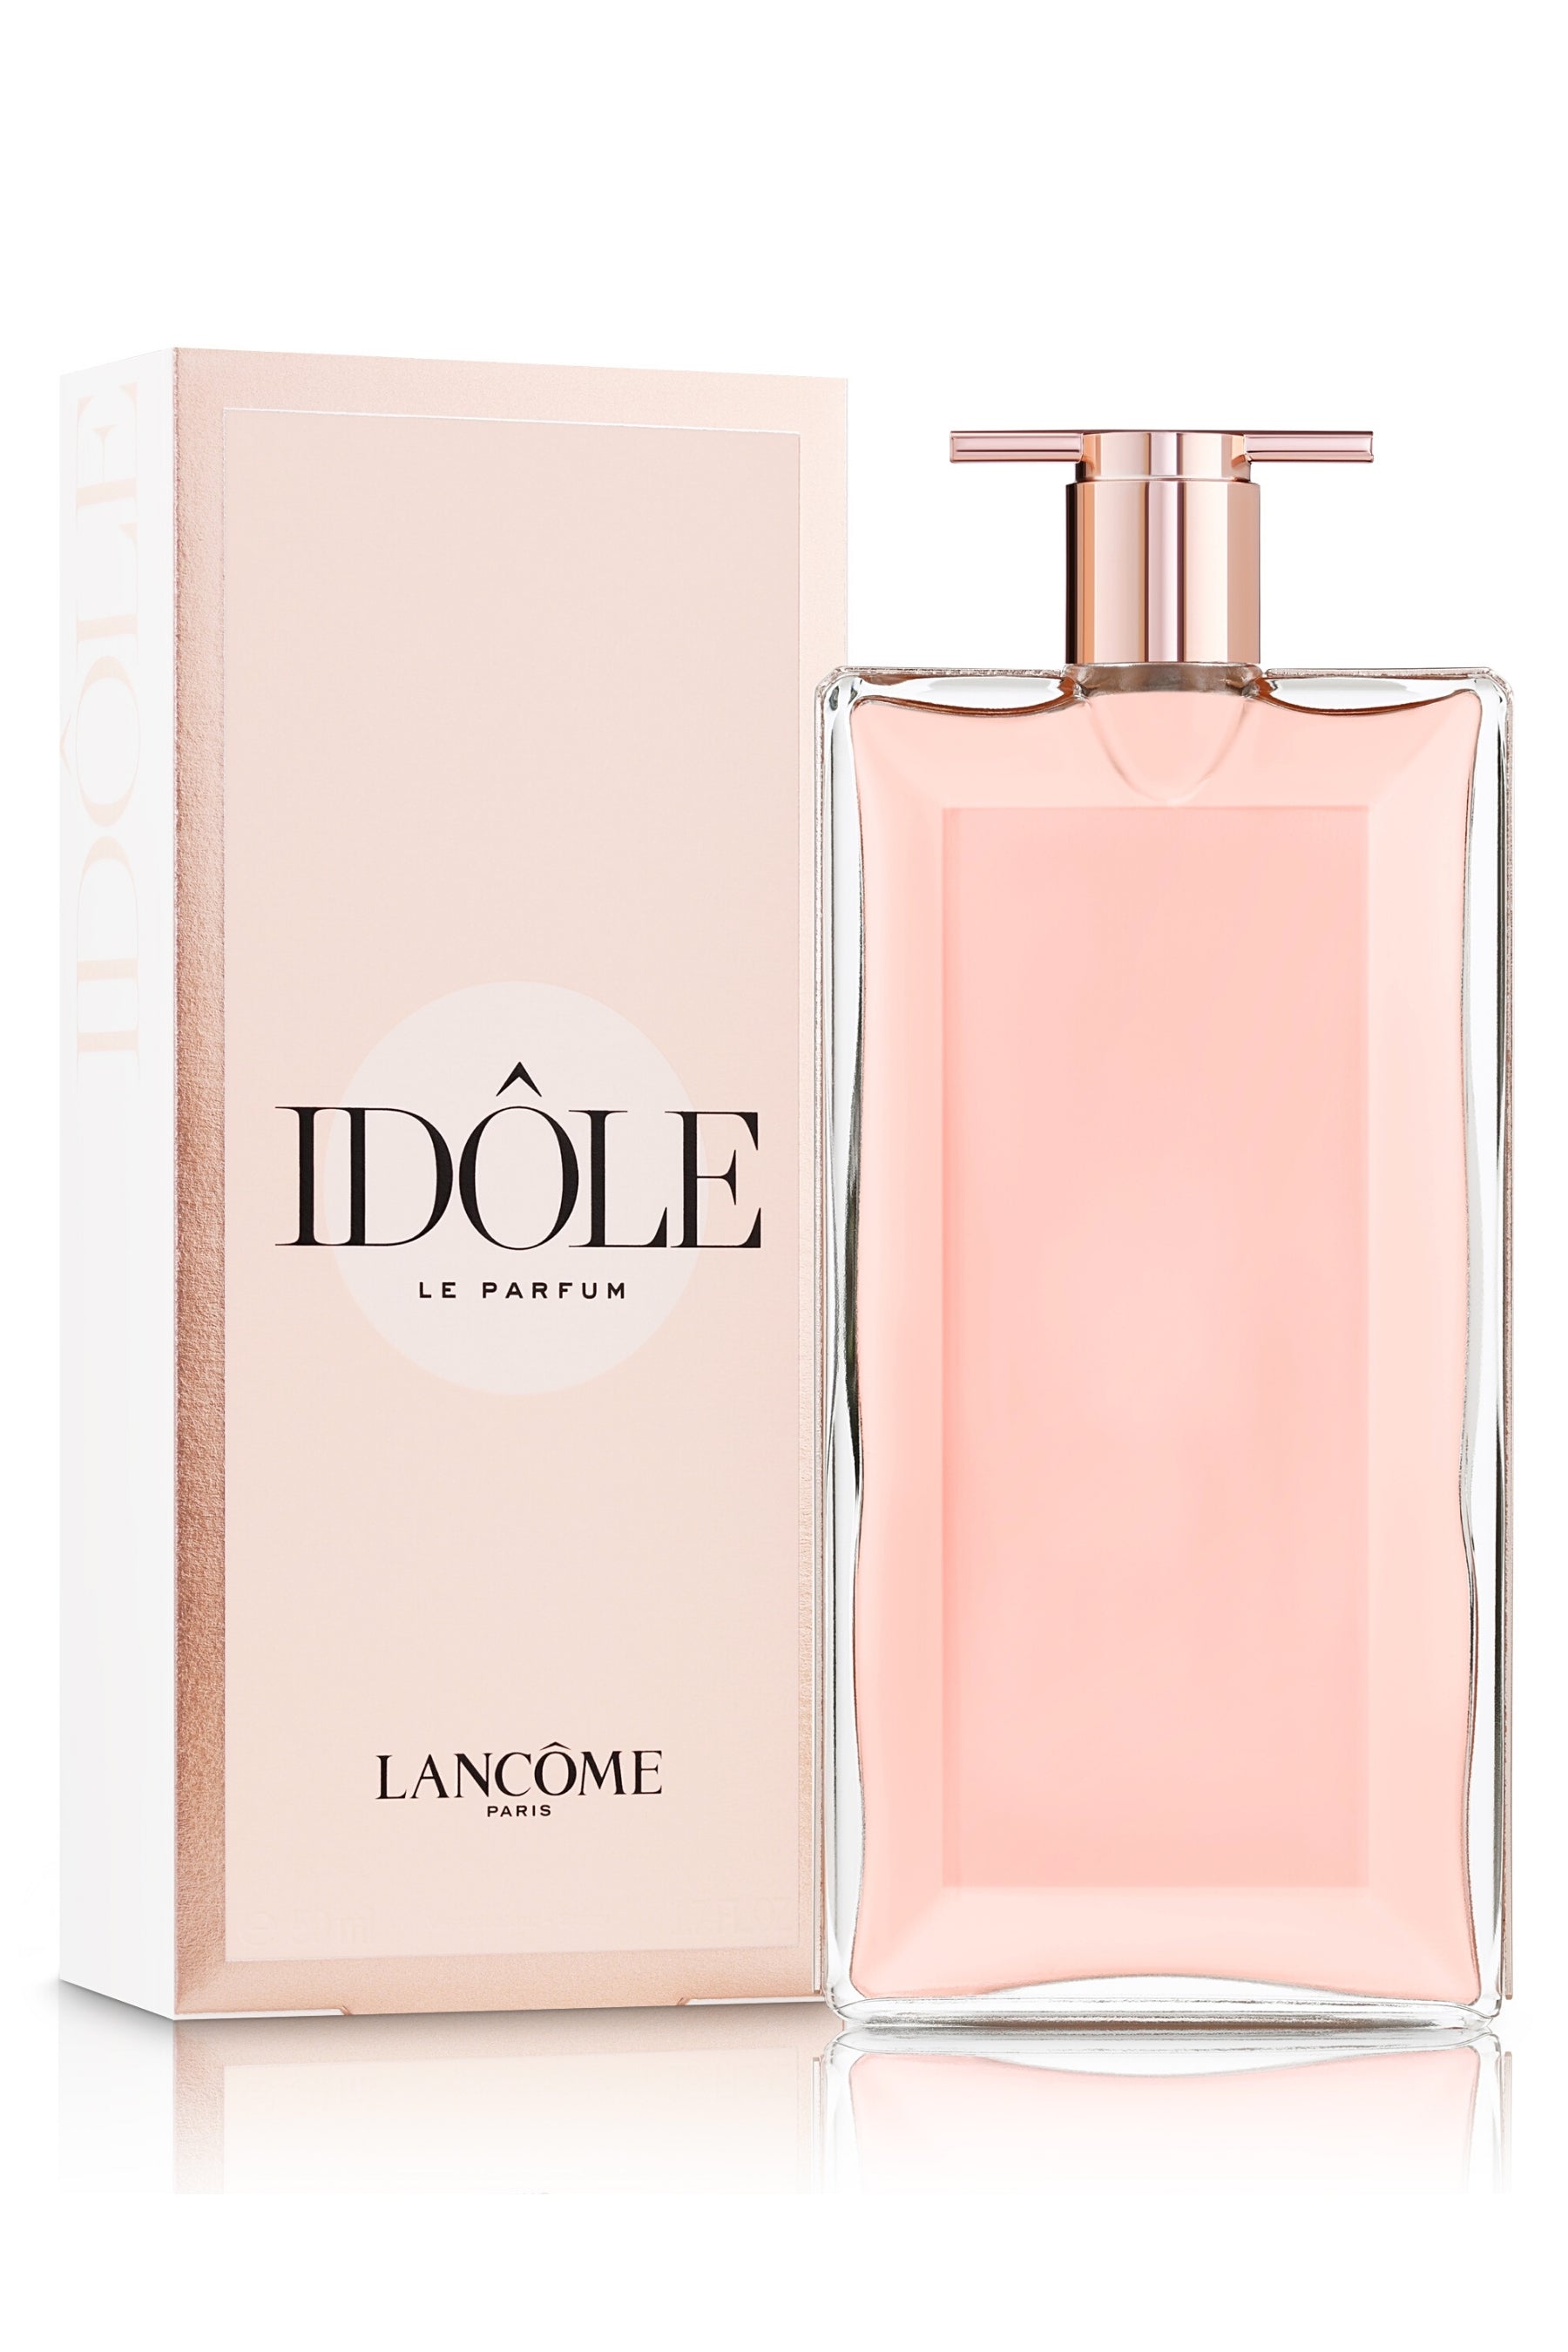 Sympatisere kaste skygge Lancome | Idole Perfume | REBL Scents